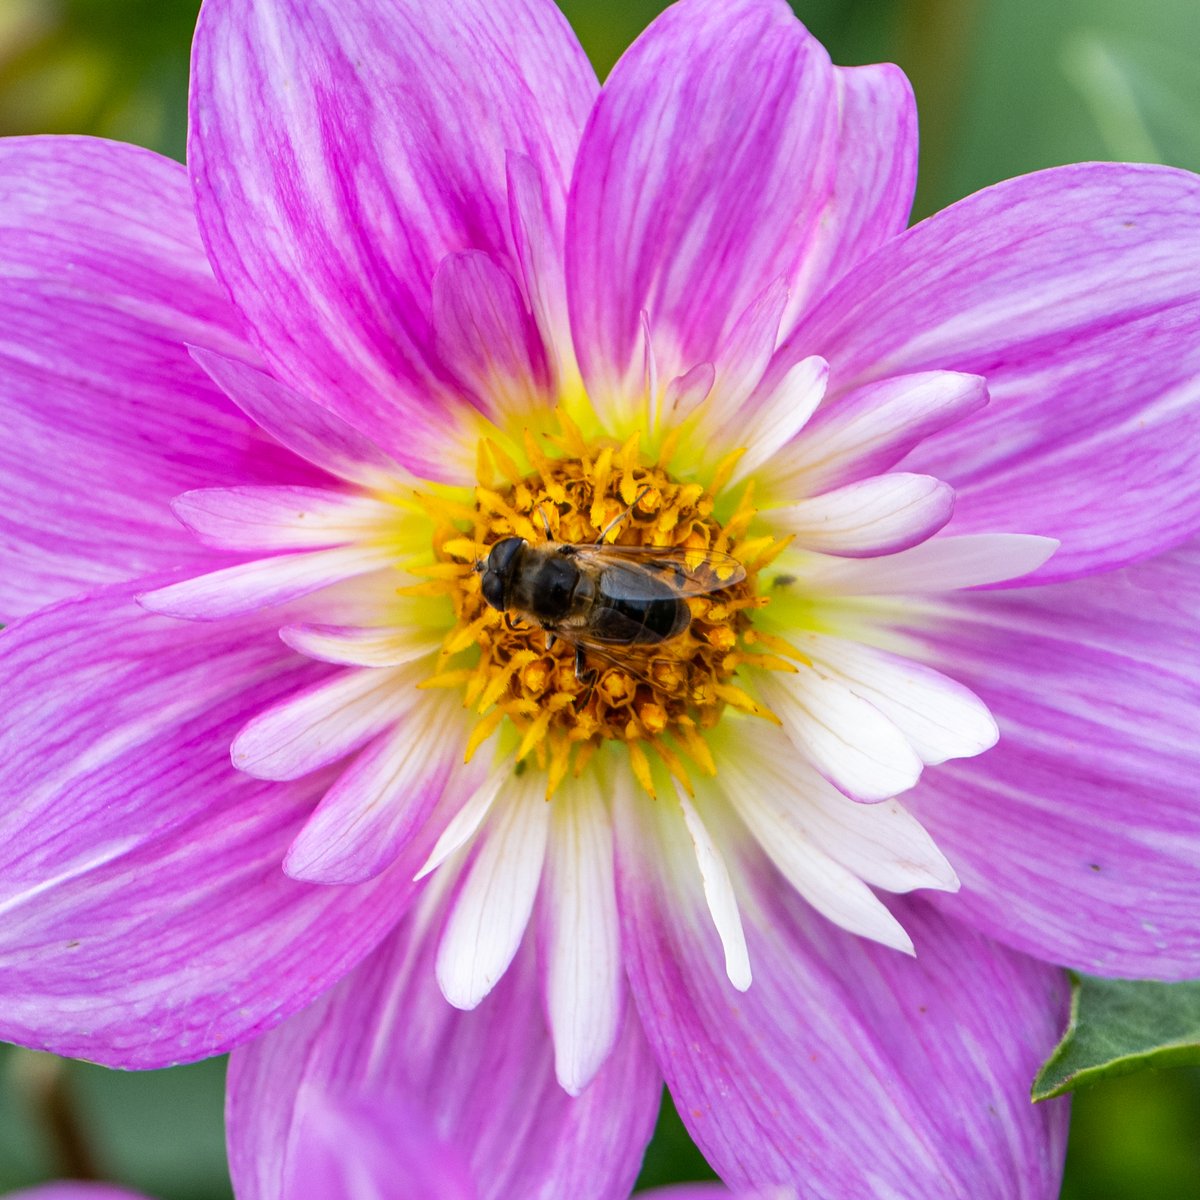 Bee-utiful photo of a Dahila to brighten up your day! 🌸🐝
Photo taken by Jamie - Eagle Eyed Girl Age 7! 🦅👁📸

@NikonEurope  @RSPCA_official  @The_RHS 
#honeybees #beesofinstagram #bees #macro
#SaveTheBees #BeeAwareness #PollinatorsMatter #NaturePhotography #BeeLover…